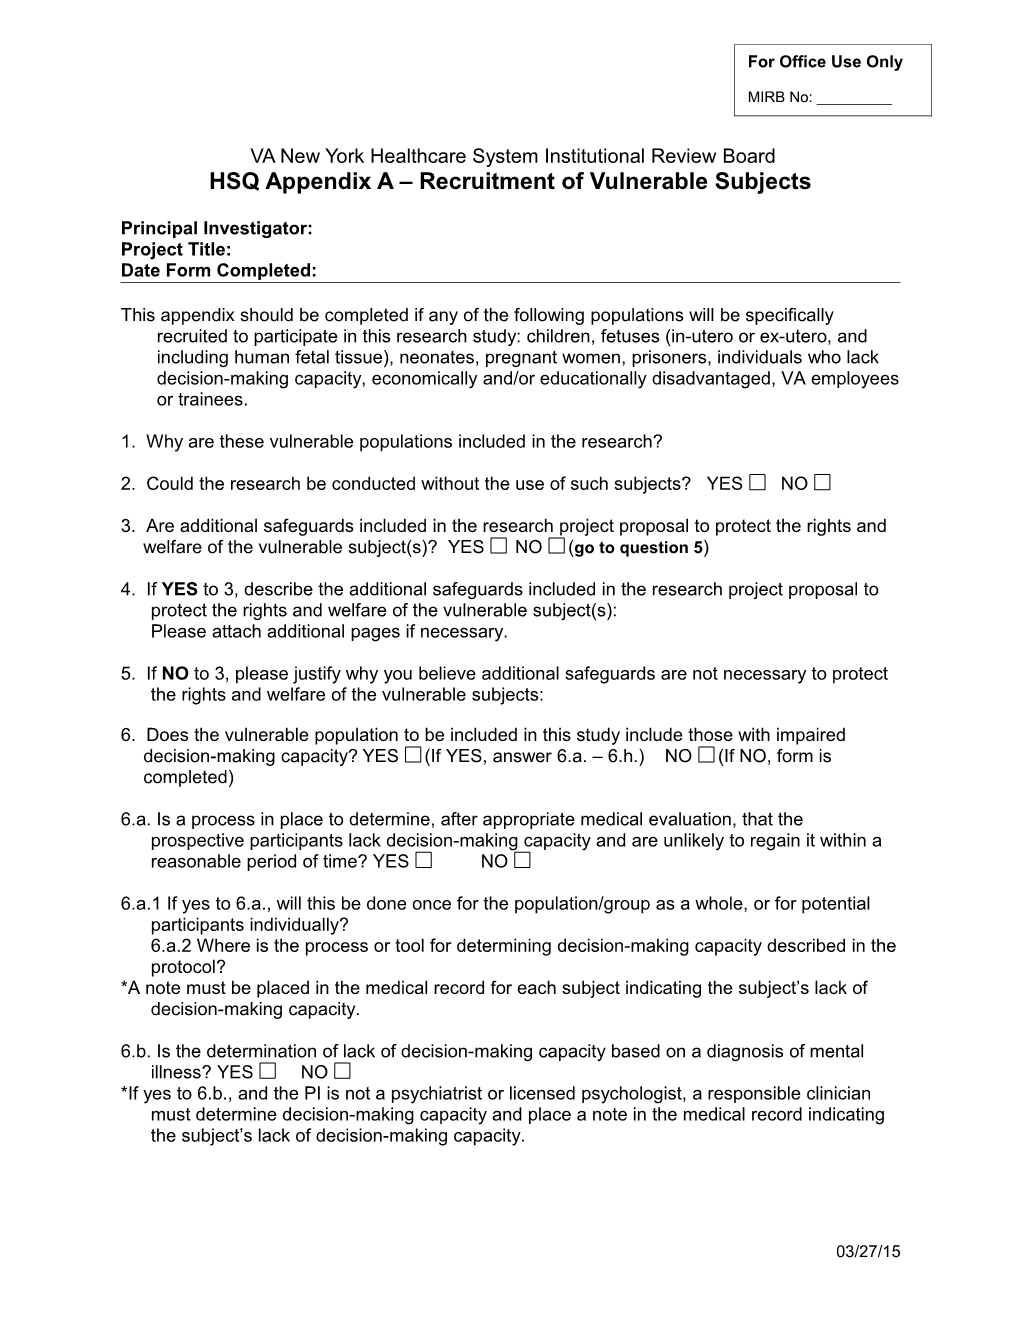 HSQ Appendix a - Recruitment of Vulnerable Subjects